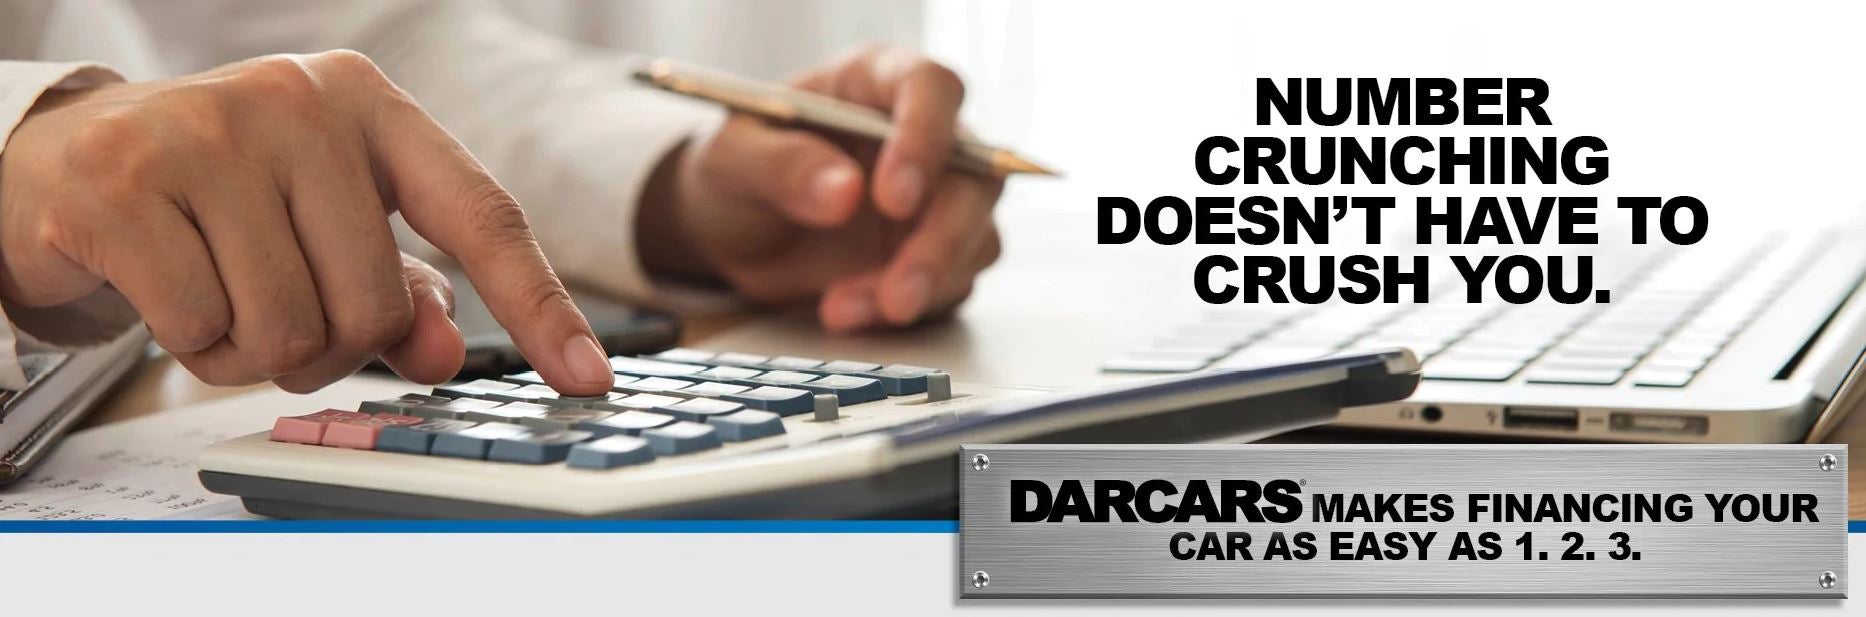 DARCARS makes financing easy | DARCARS Chrysler Dodge Jeep RAM of Rockville in Rockville MD